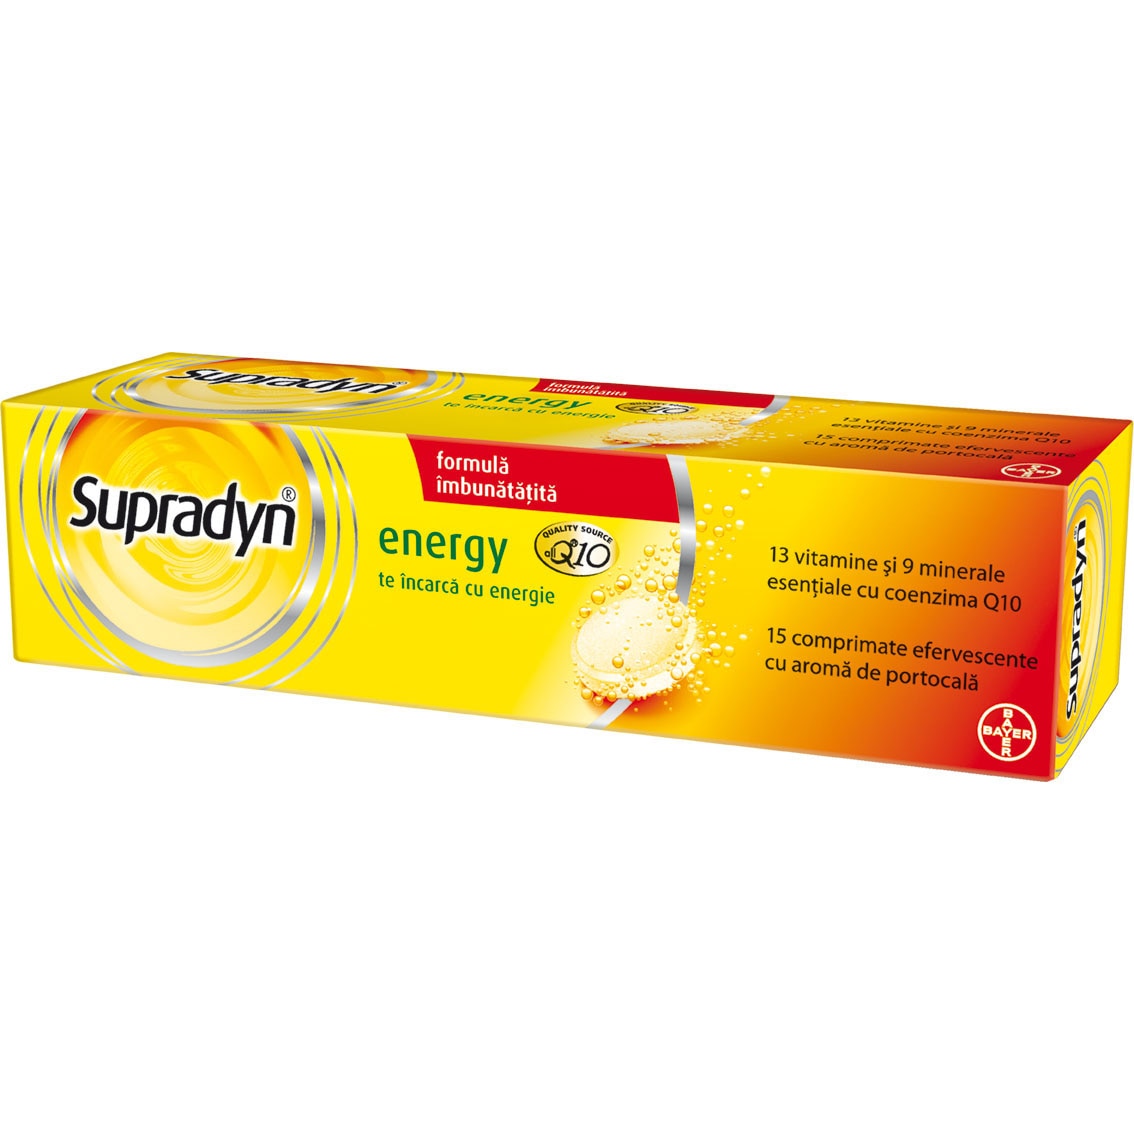 Tonice generale - Supradyn energy+coenzima Q10,15 comprimate effervescente, farmacieieftina.ro